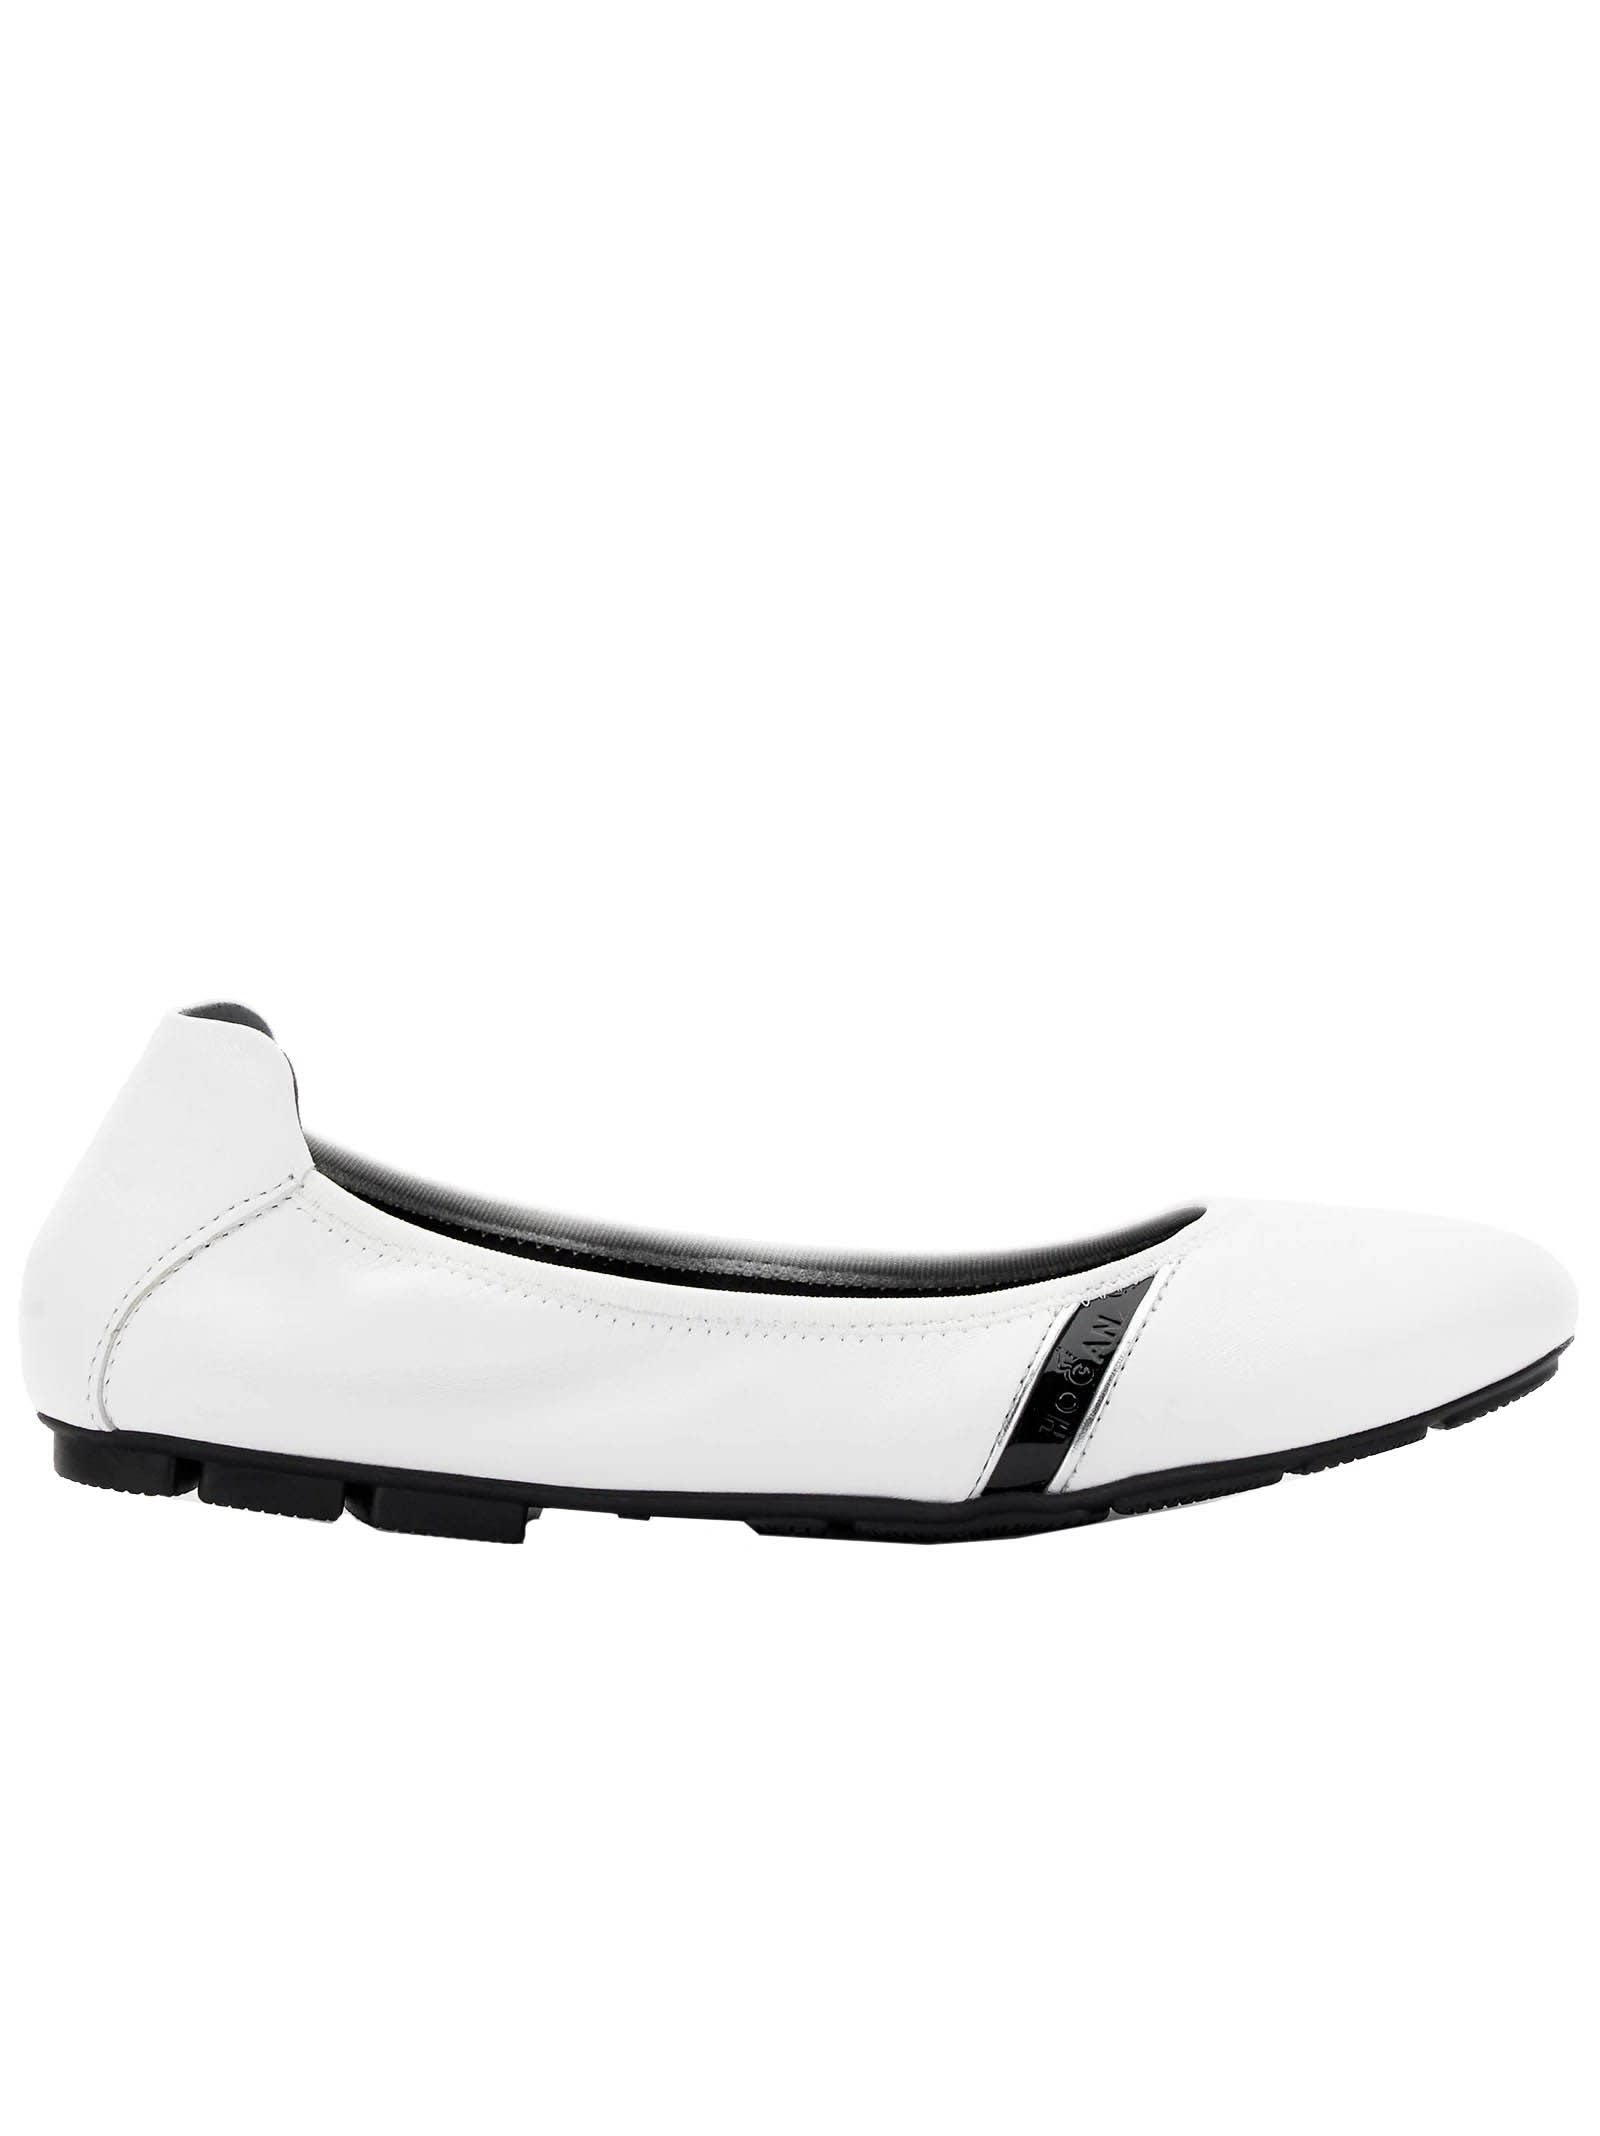 Hogan White Leather Ballet Shoes